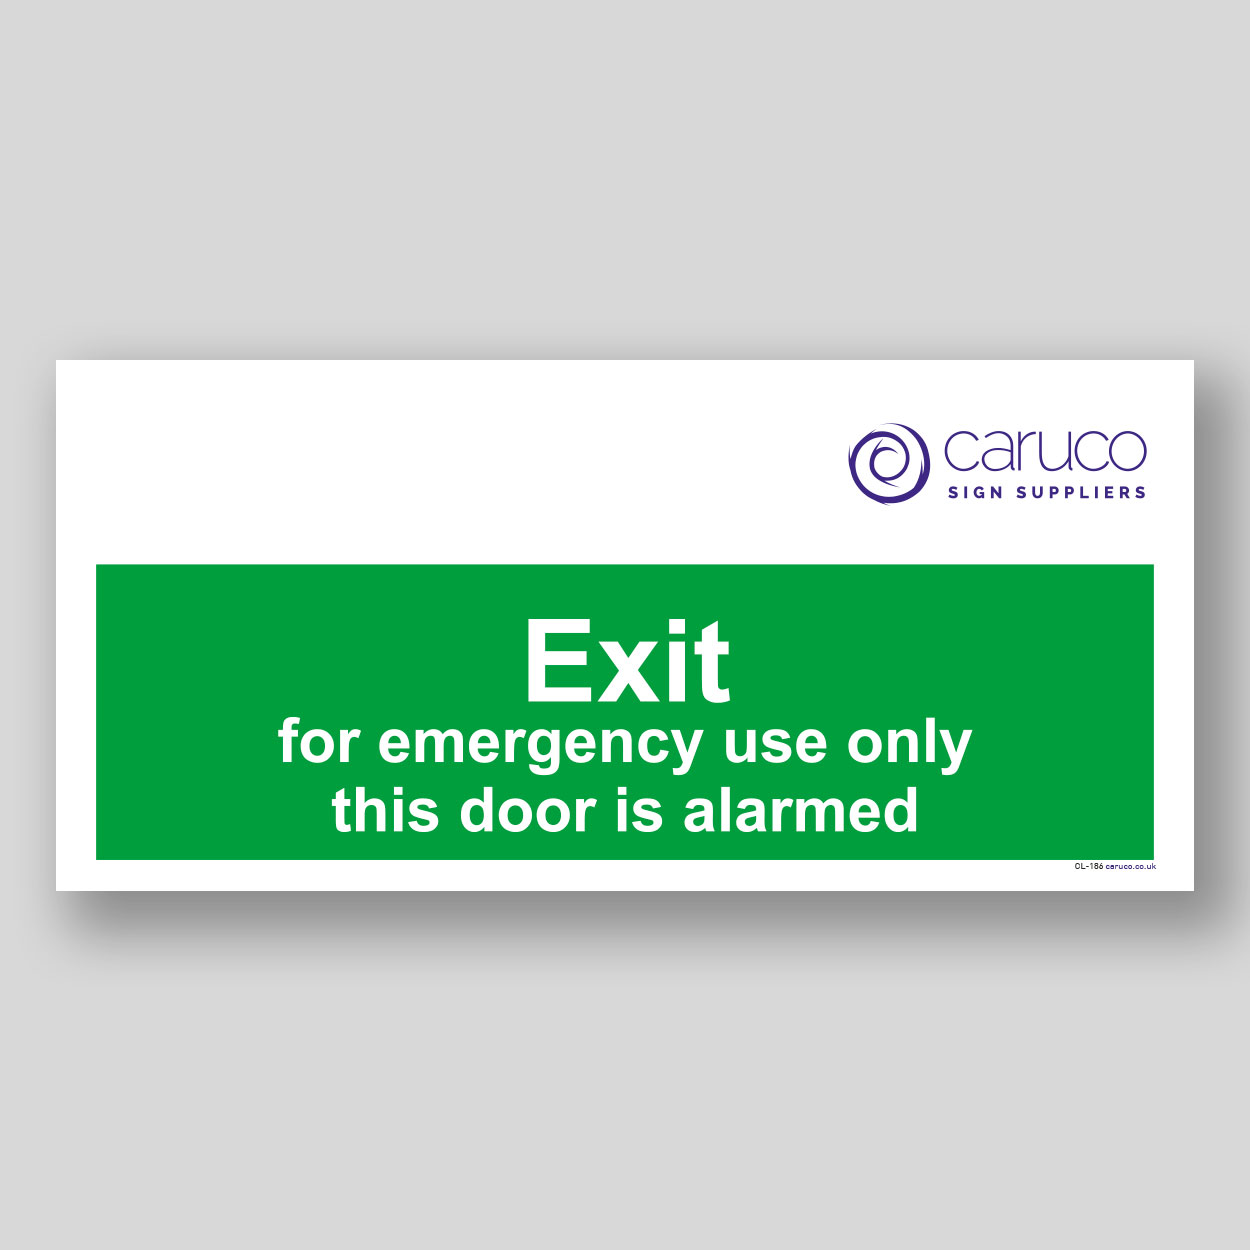 CL-186 Exit - emergency use only - door alarmed